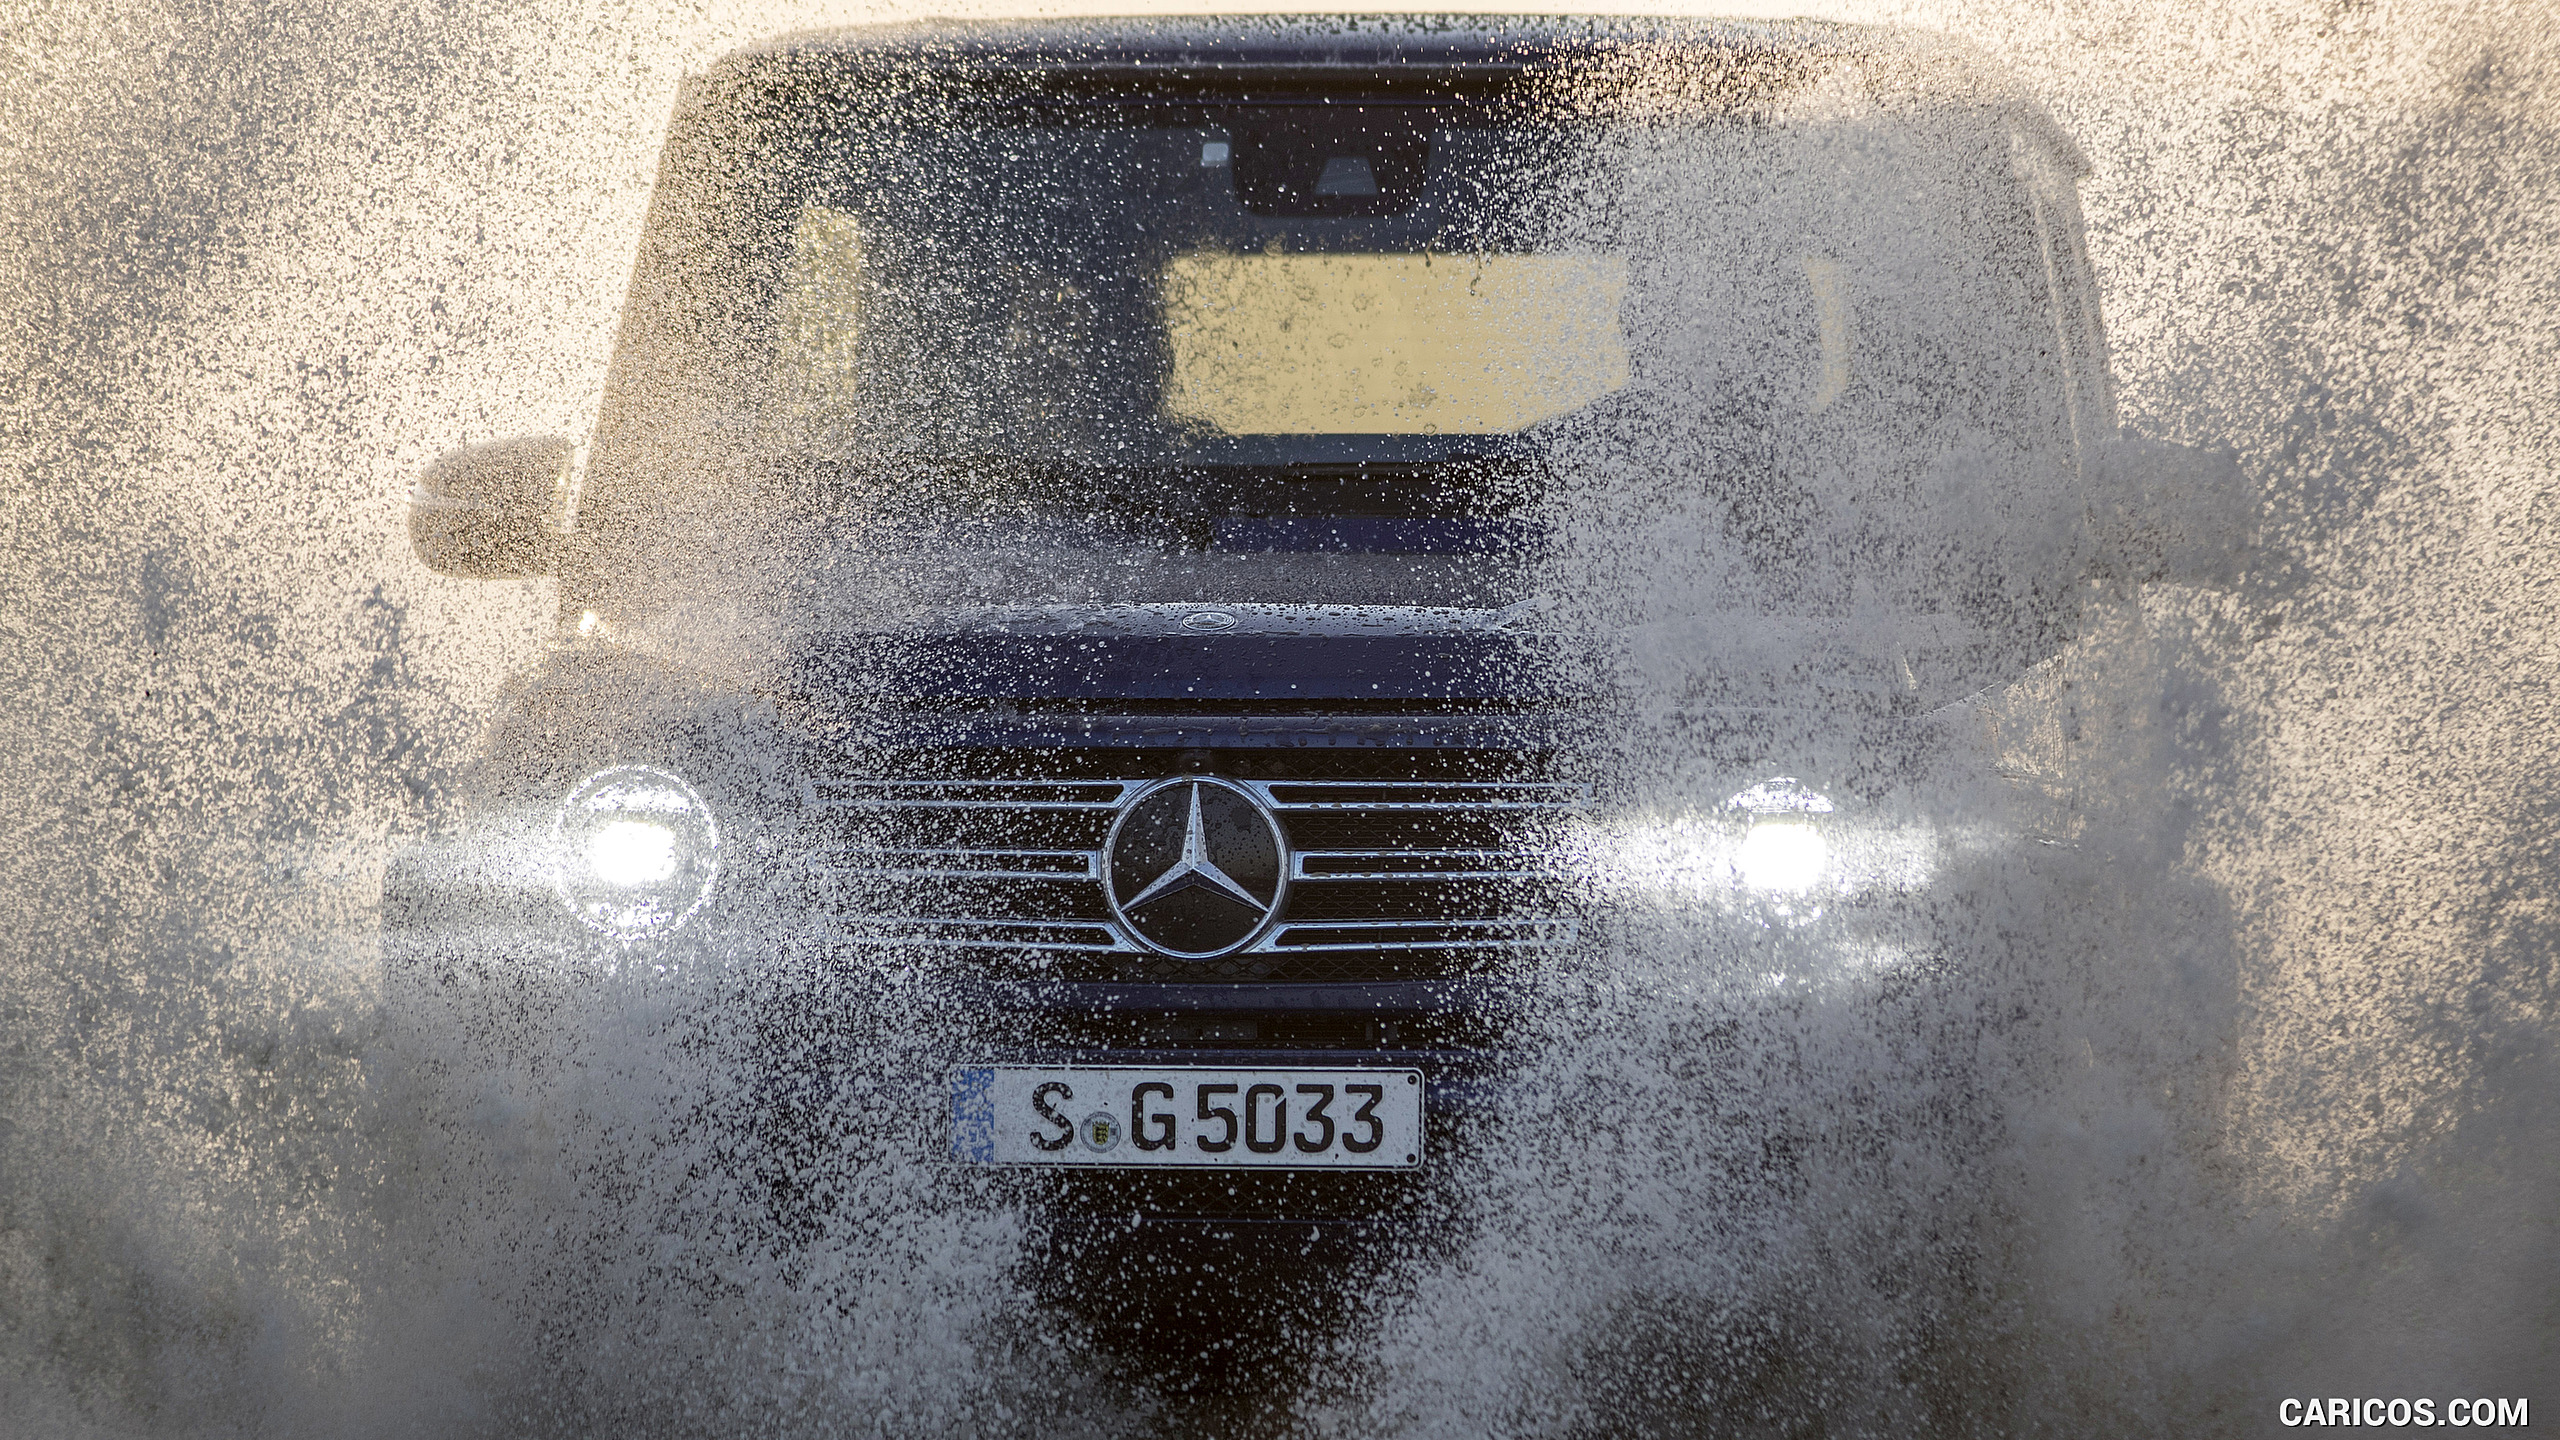 2019 Mercedes-Benz G-Class G550 - Off-Road, #163 of 397